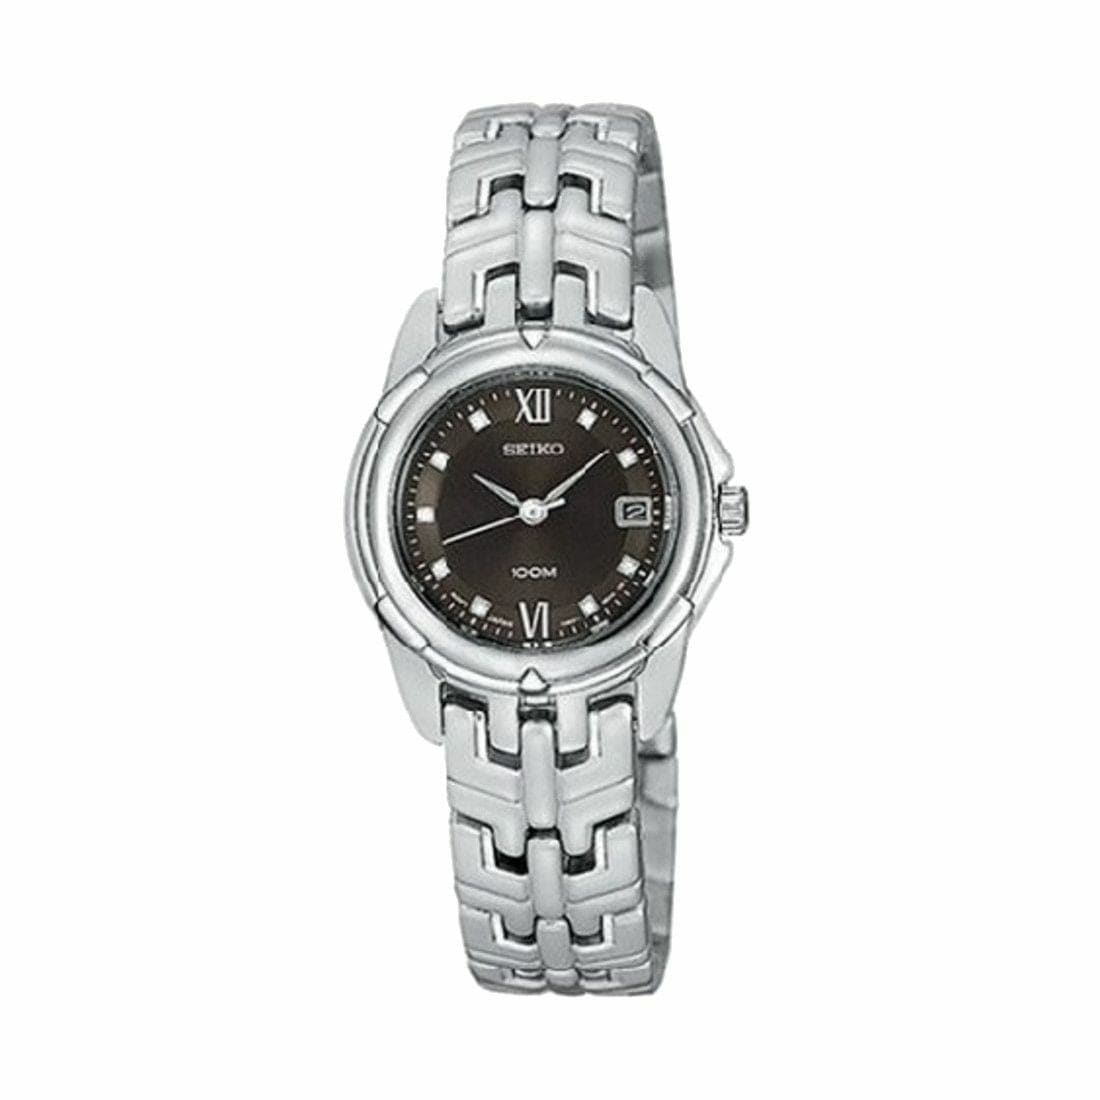 Seiko SXD577 Le Grand Sport Stainless Steel Black Dial Women's Quartz Watch